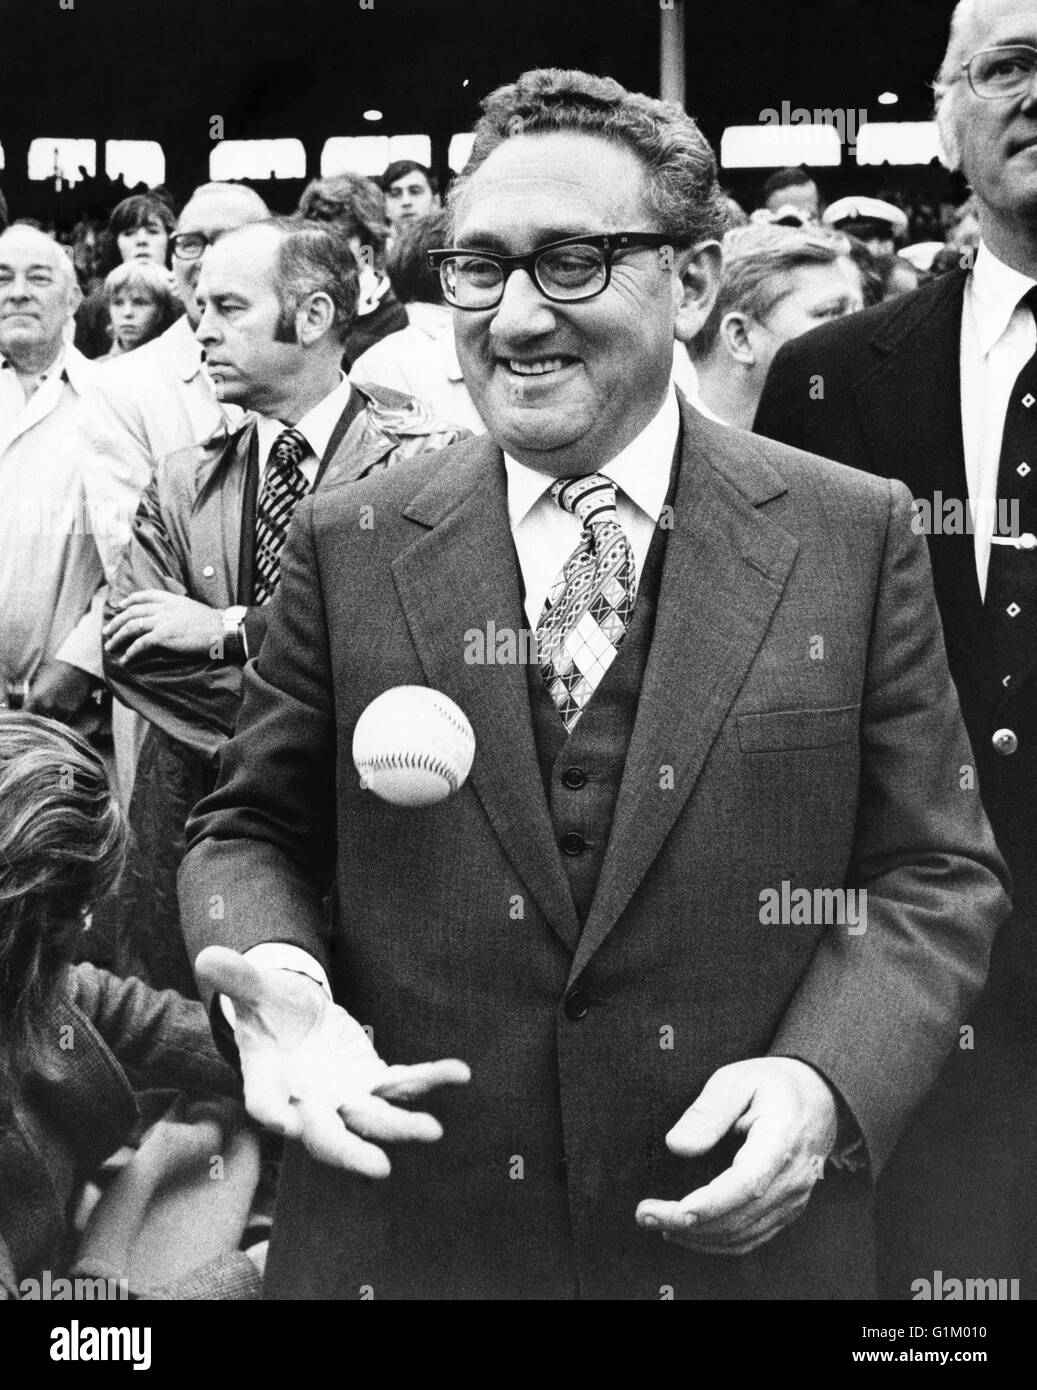 HENRY KISSINGER (1923-).  Deutschstämmiger US-amerikanischer Diplomat. Fotografiert im Fenway Park in Boston, Massachusetts während der Weltmeisterschaft 1975. Stockfoto